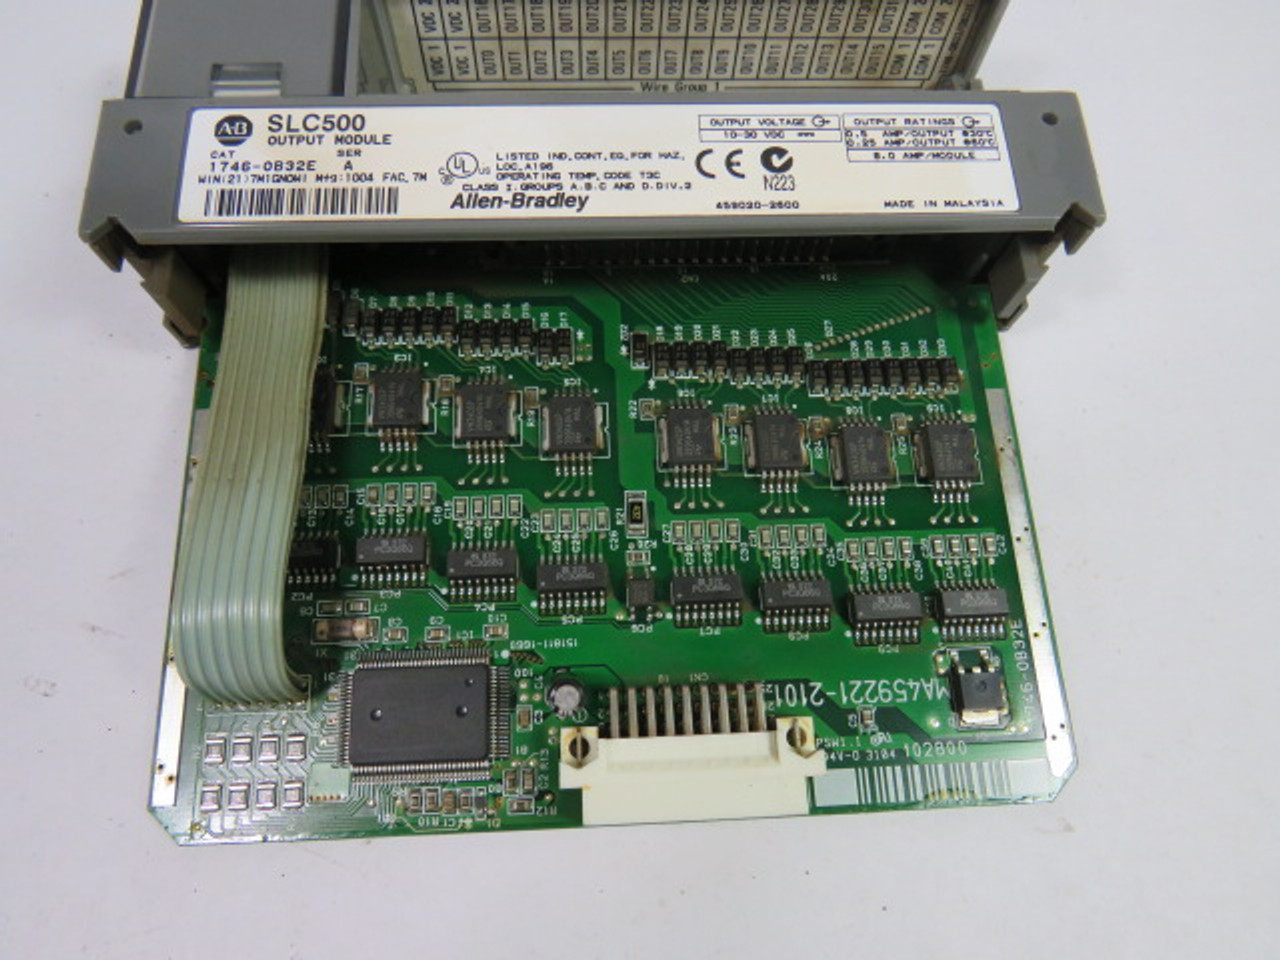 Allen-Bradley 1746-OB32E Series A Output Module 10-30VDC USED